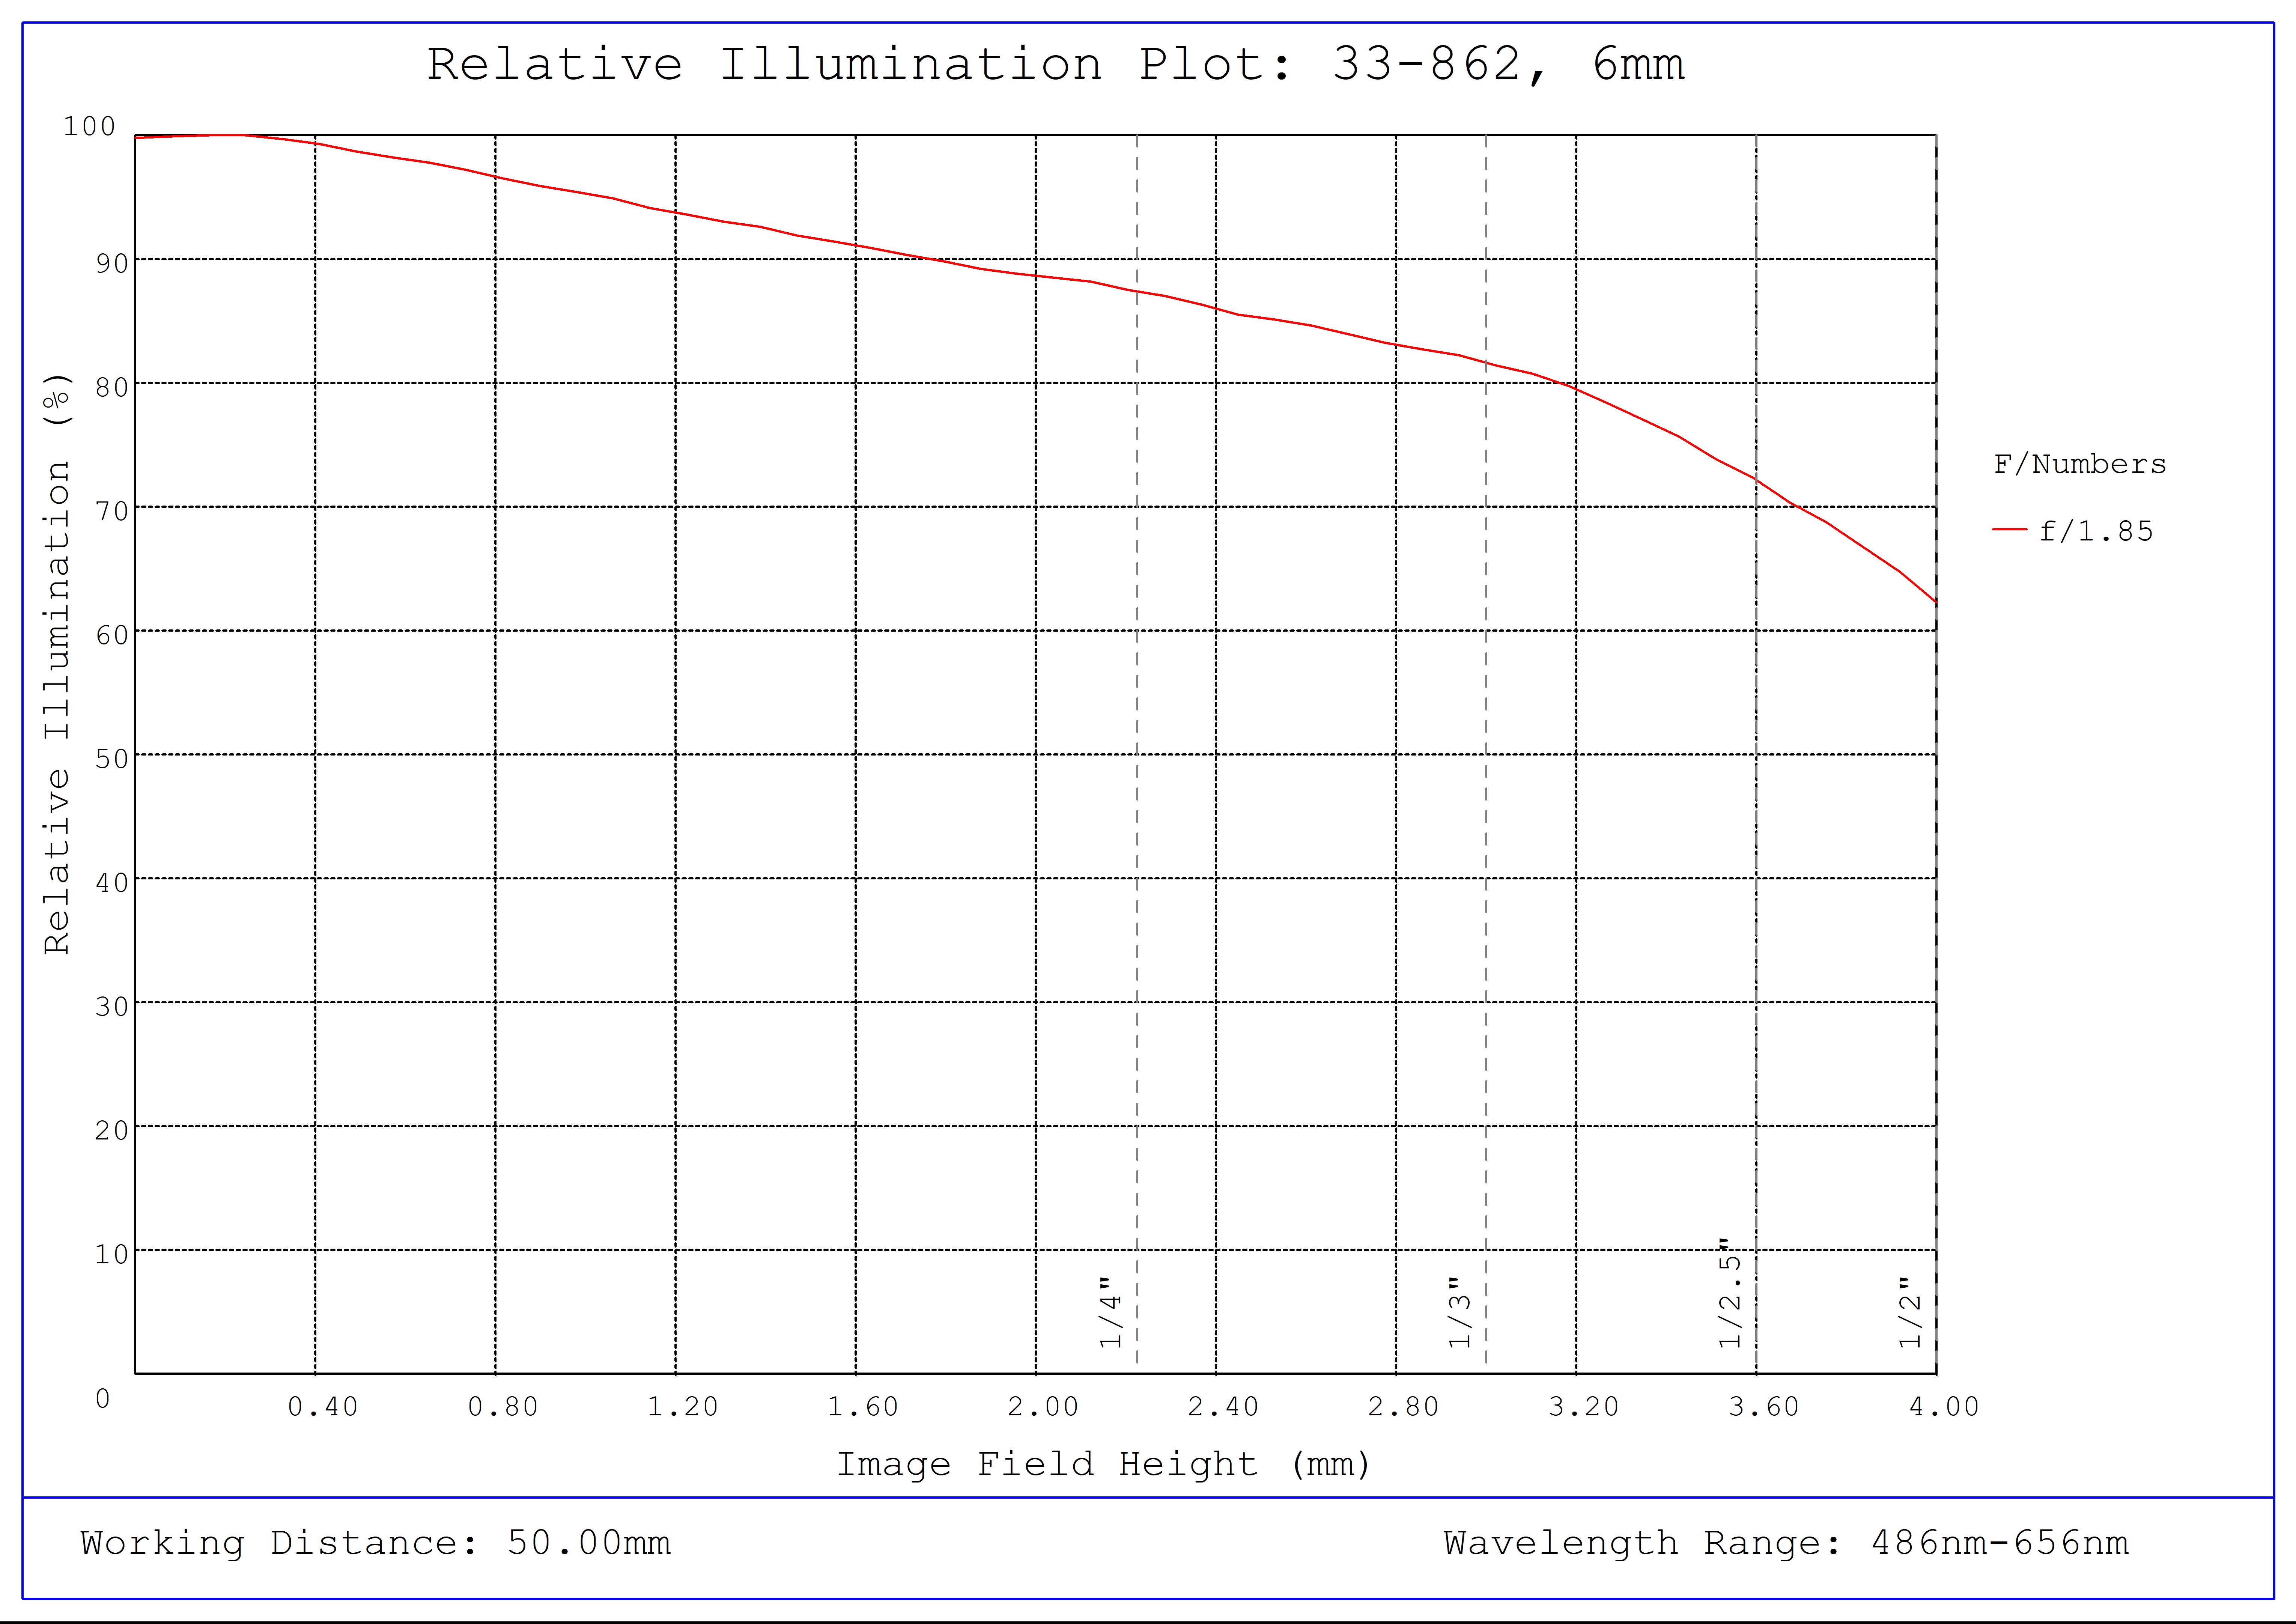 #33-862, 6mm, f/1.85 UCi Series Fixed Focal Length Lens, Relative Illumination Plot